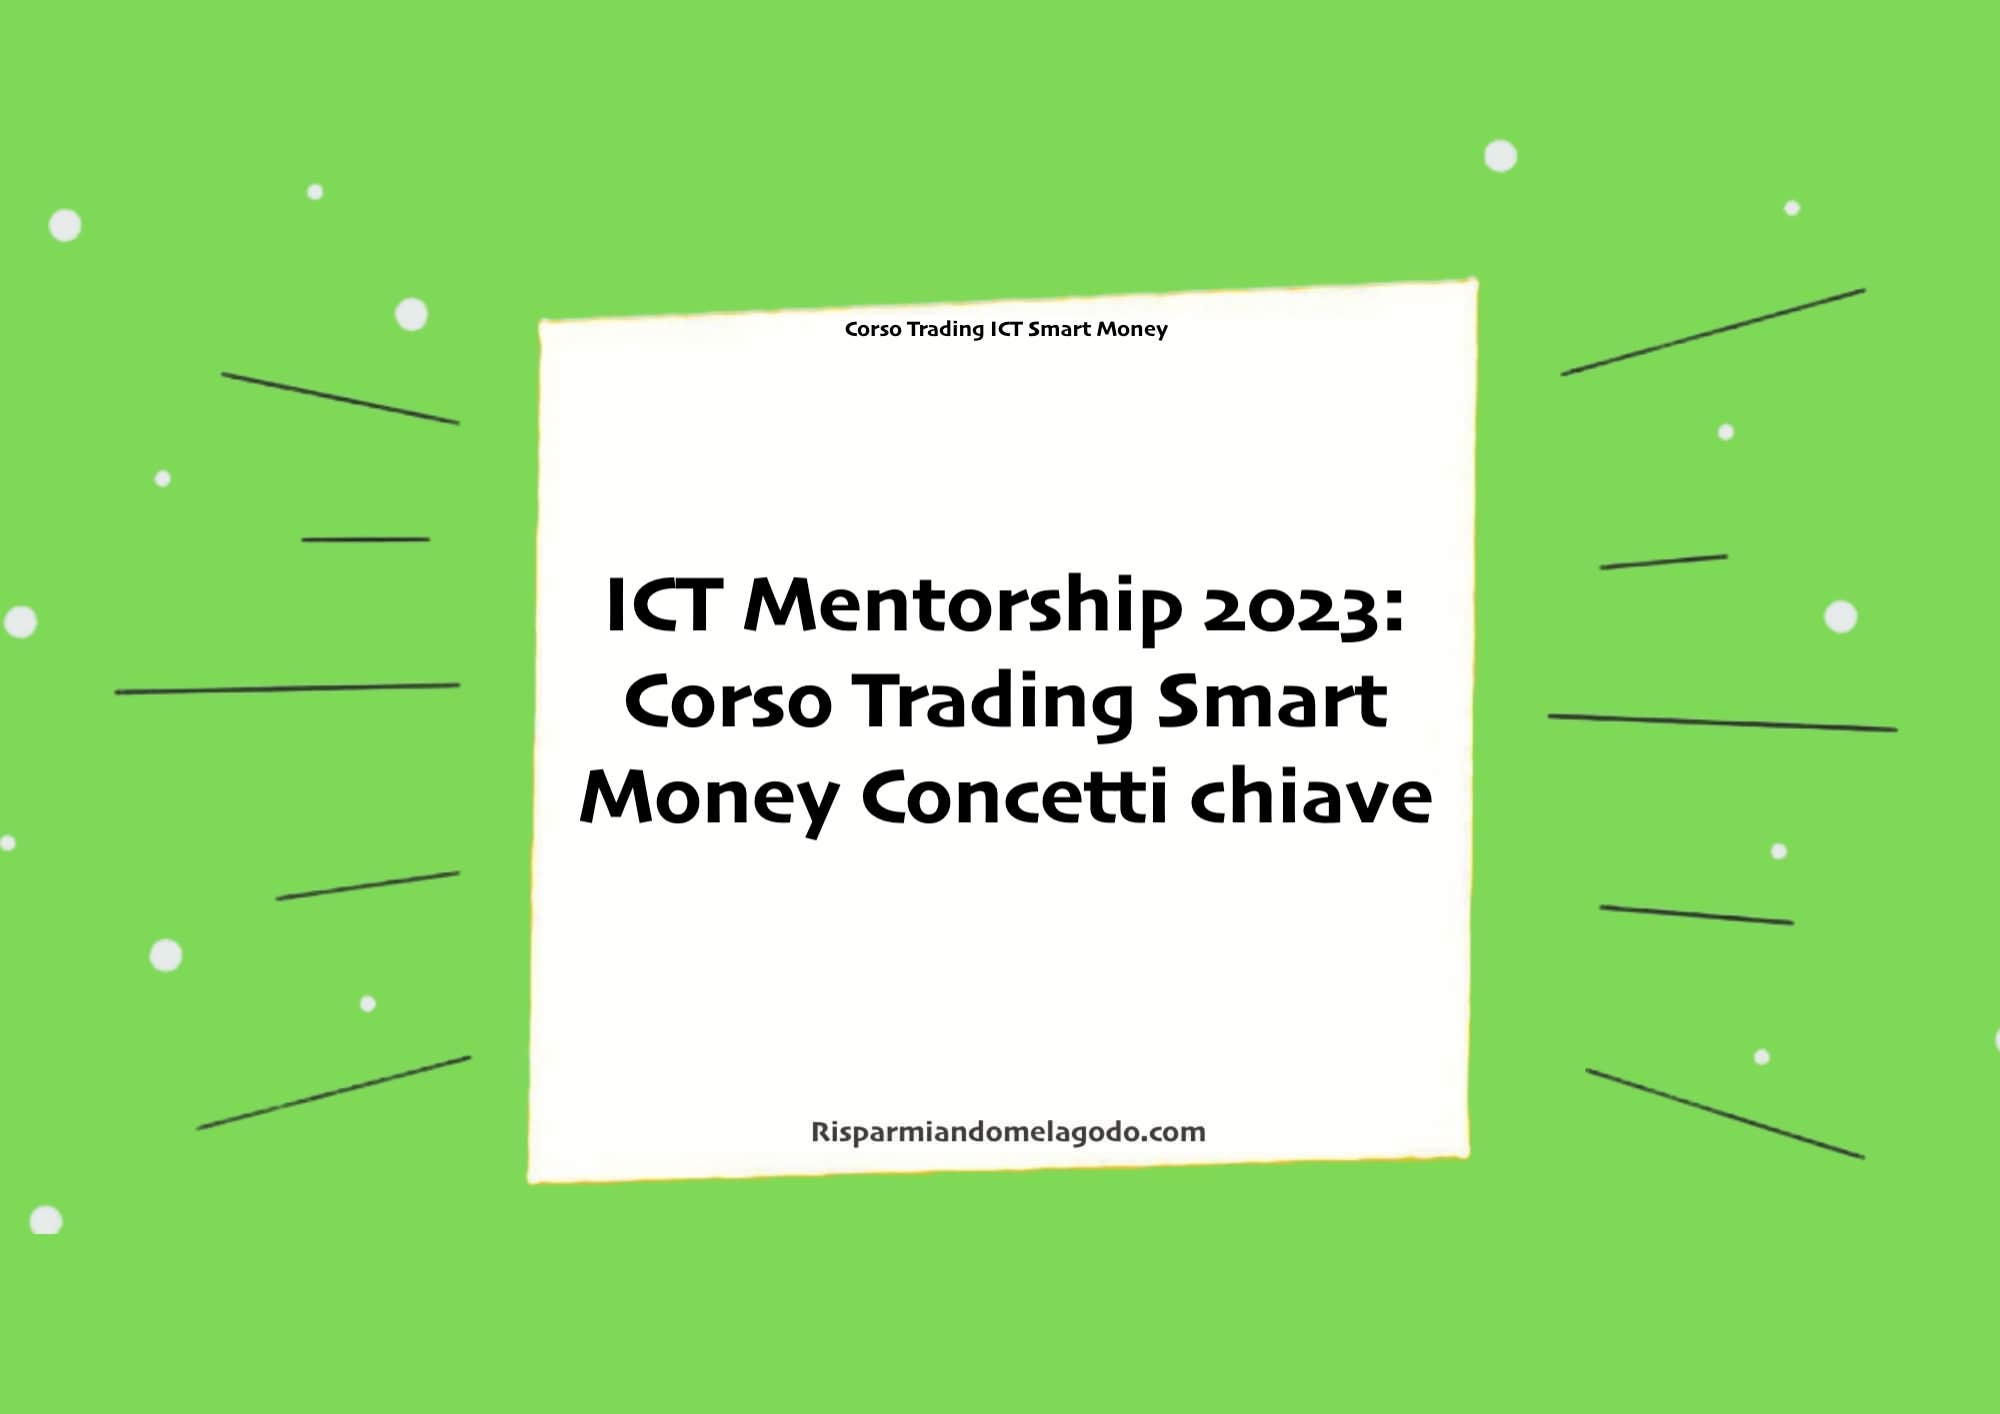 ICT Mentorship 2023: Corso Trading Smart Money Concetti chiave